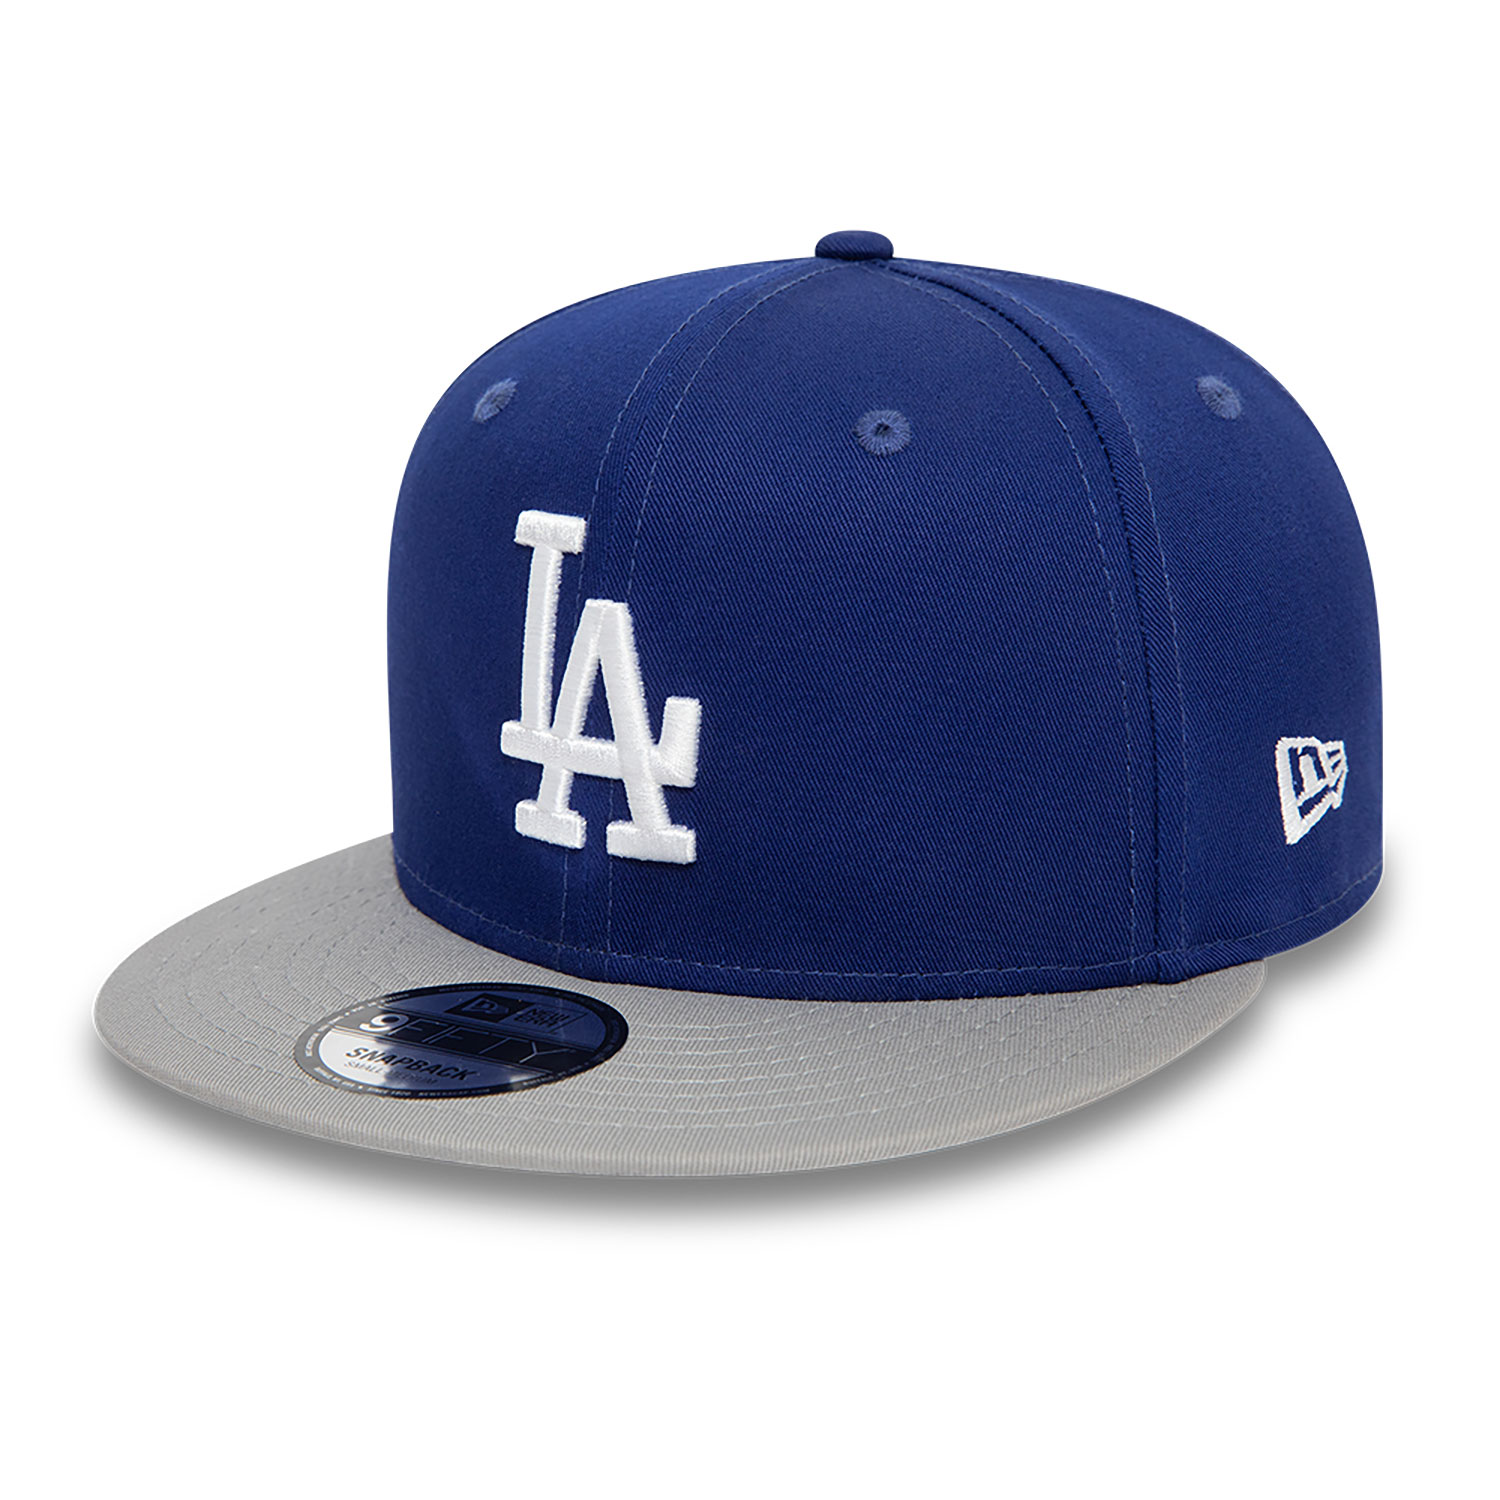 LA Dodgers Contrast Side Patch Blue 9FIFTY Snapback Cap